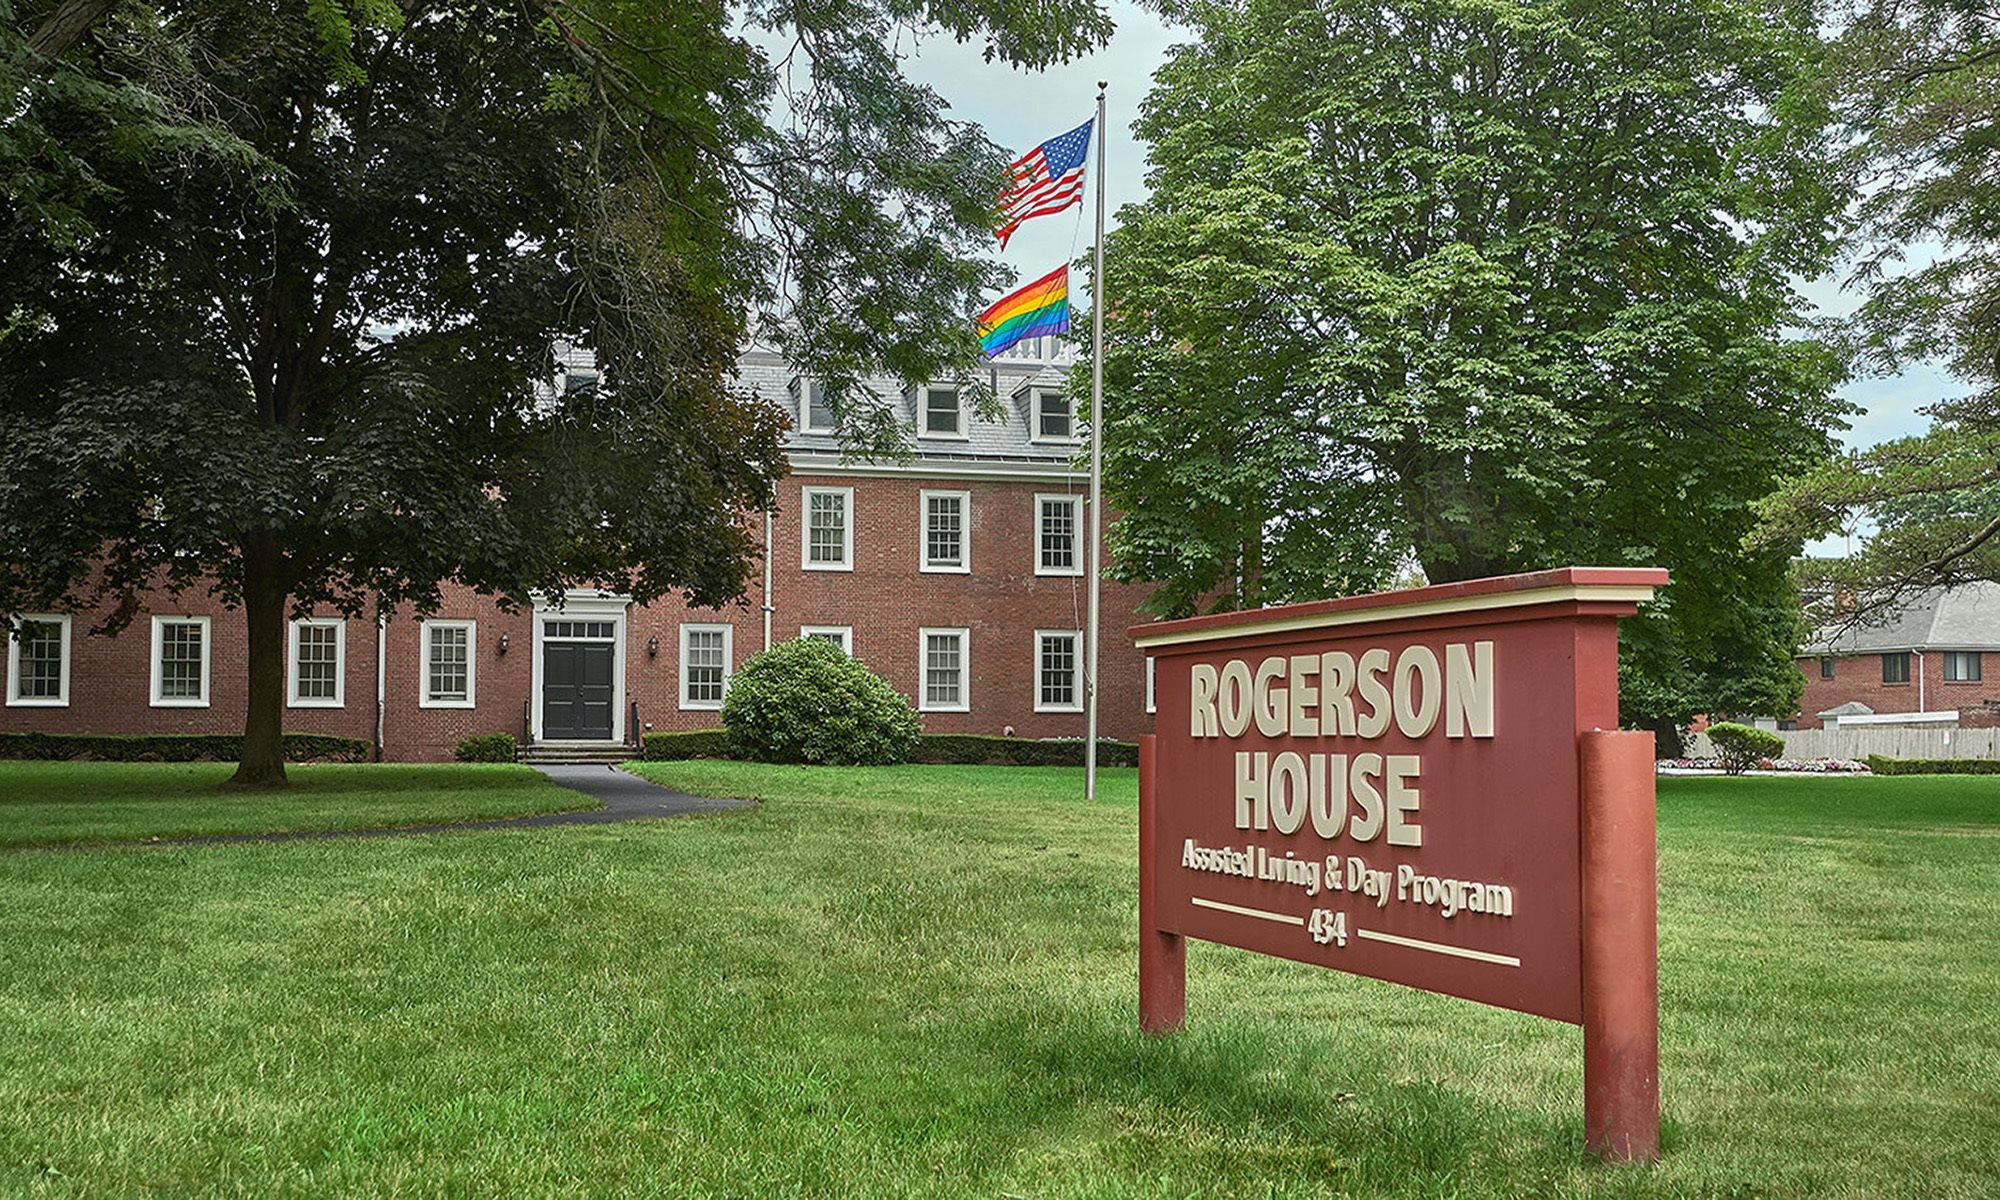 Rogerson House image